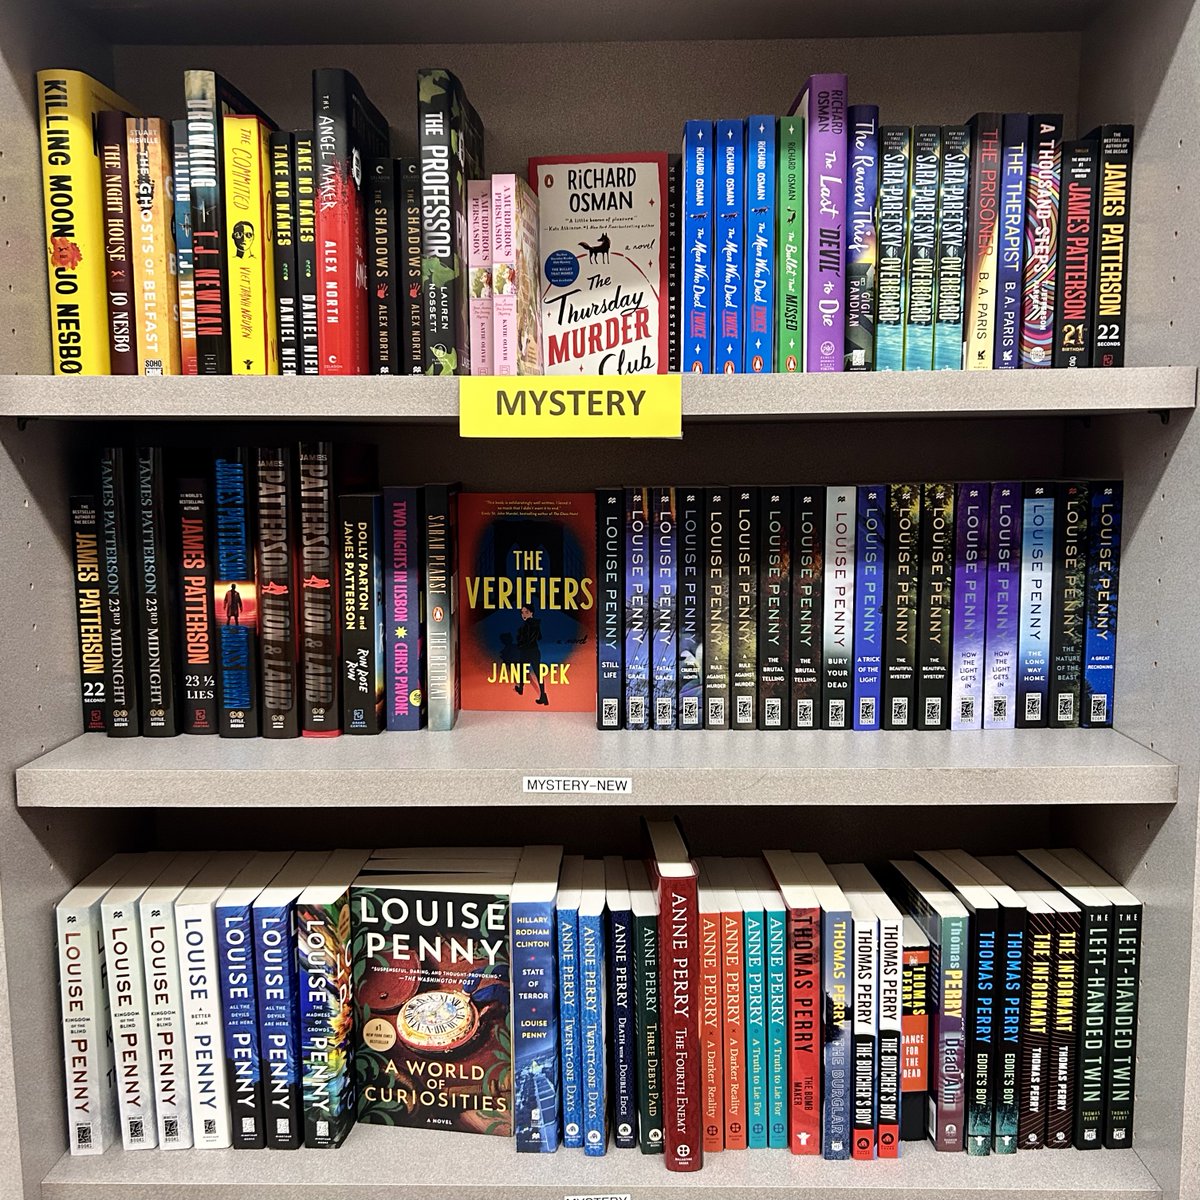 Happy #MondayMystery! 📚
#indiebookstore #shoplocal #tucson #bookworm #booklover #shelfie #mysterynovel